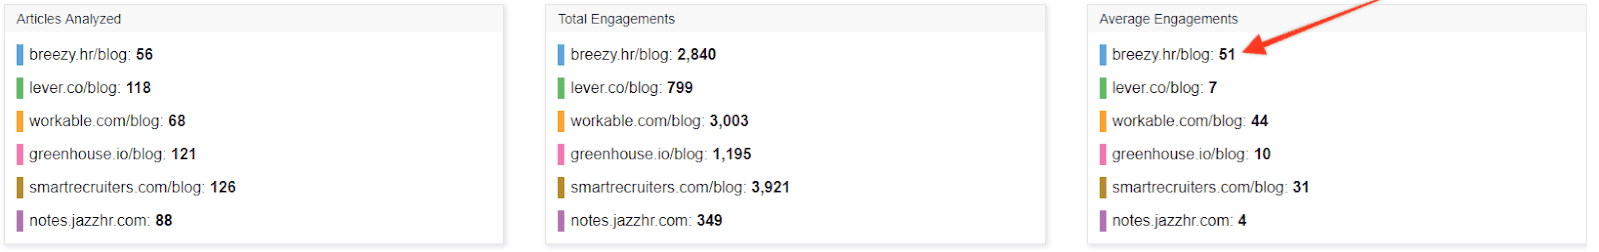 Statistics about different website blogs